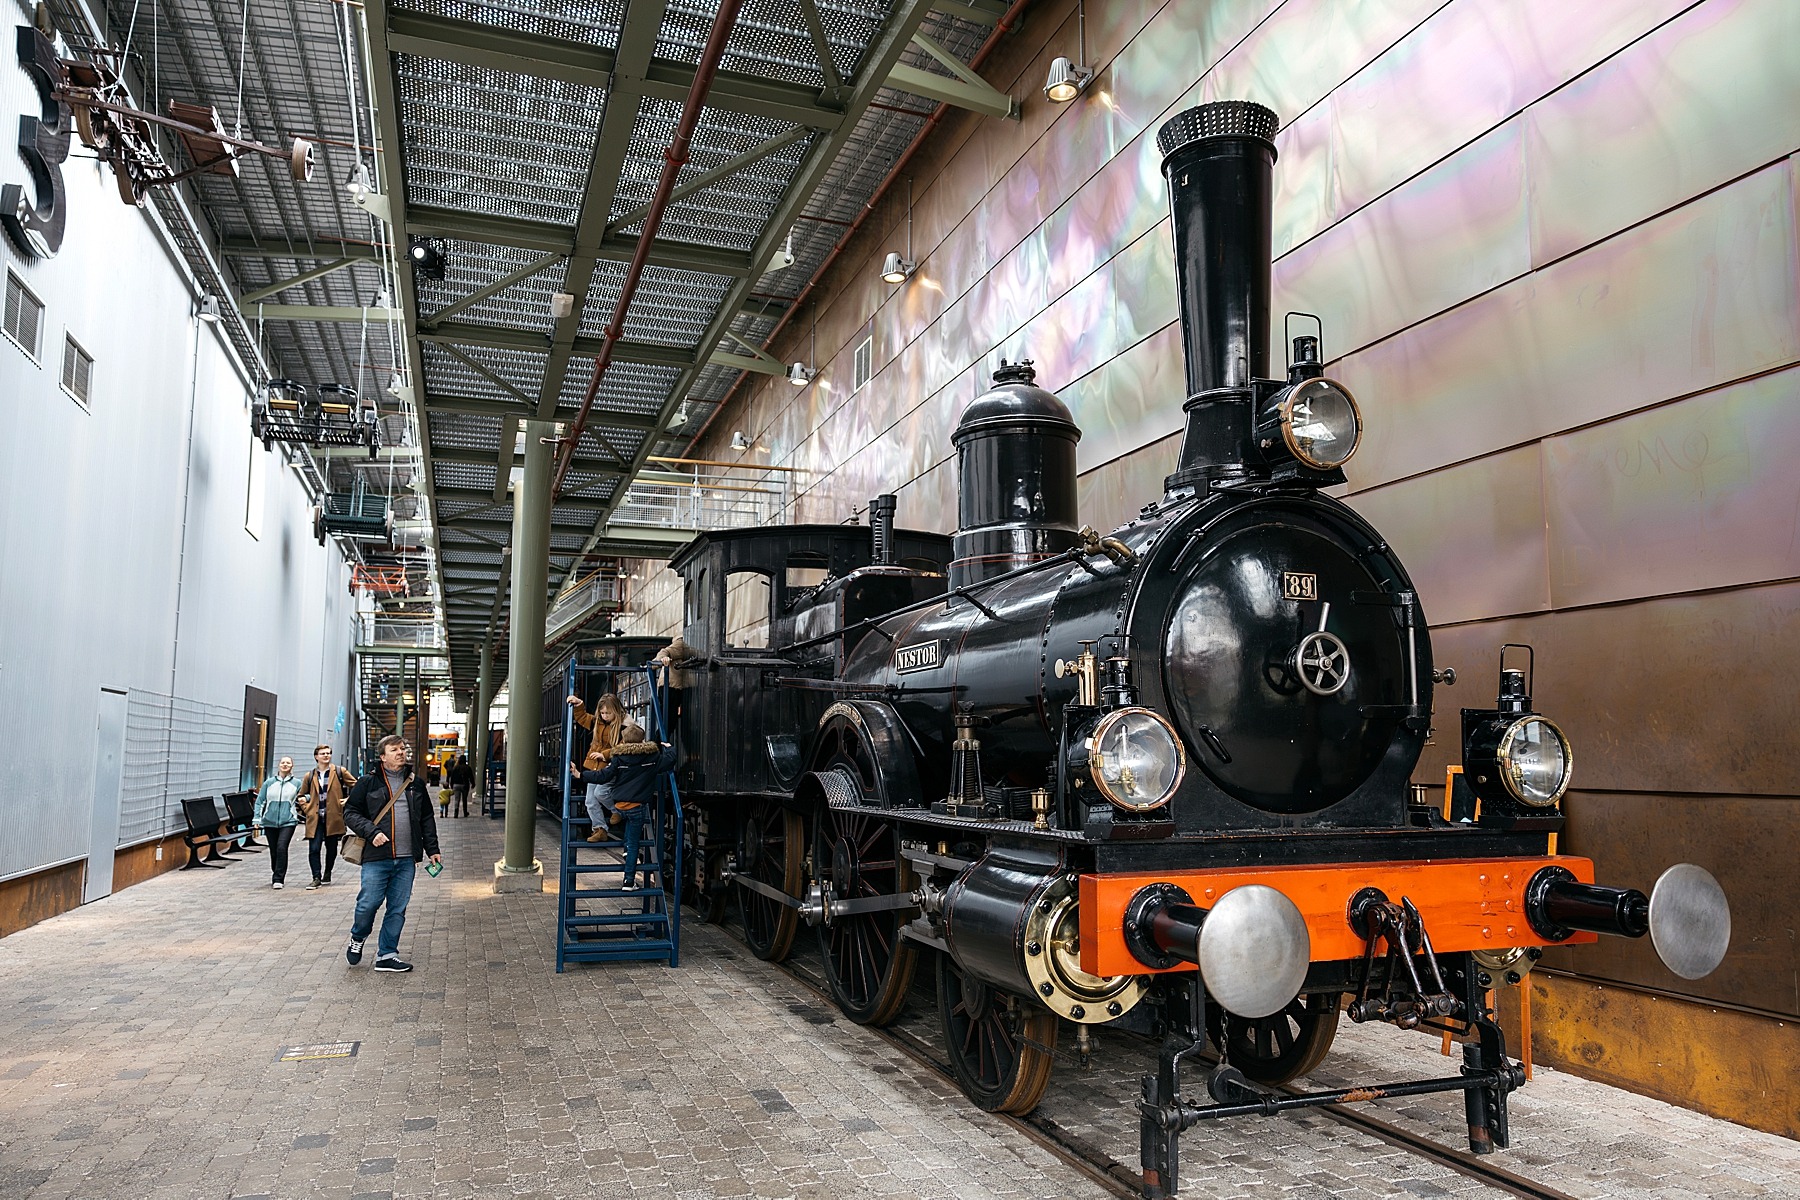 Spoorwegmuseum, l'incroyable musée du train de Utrecht 15